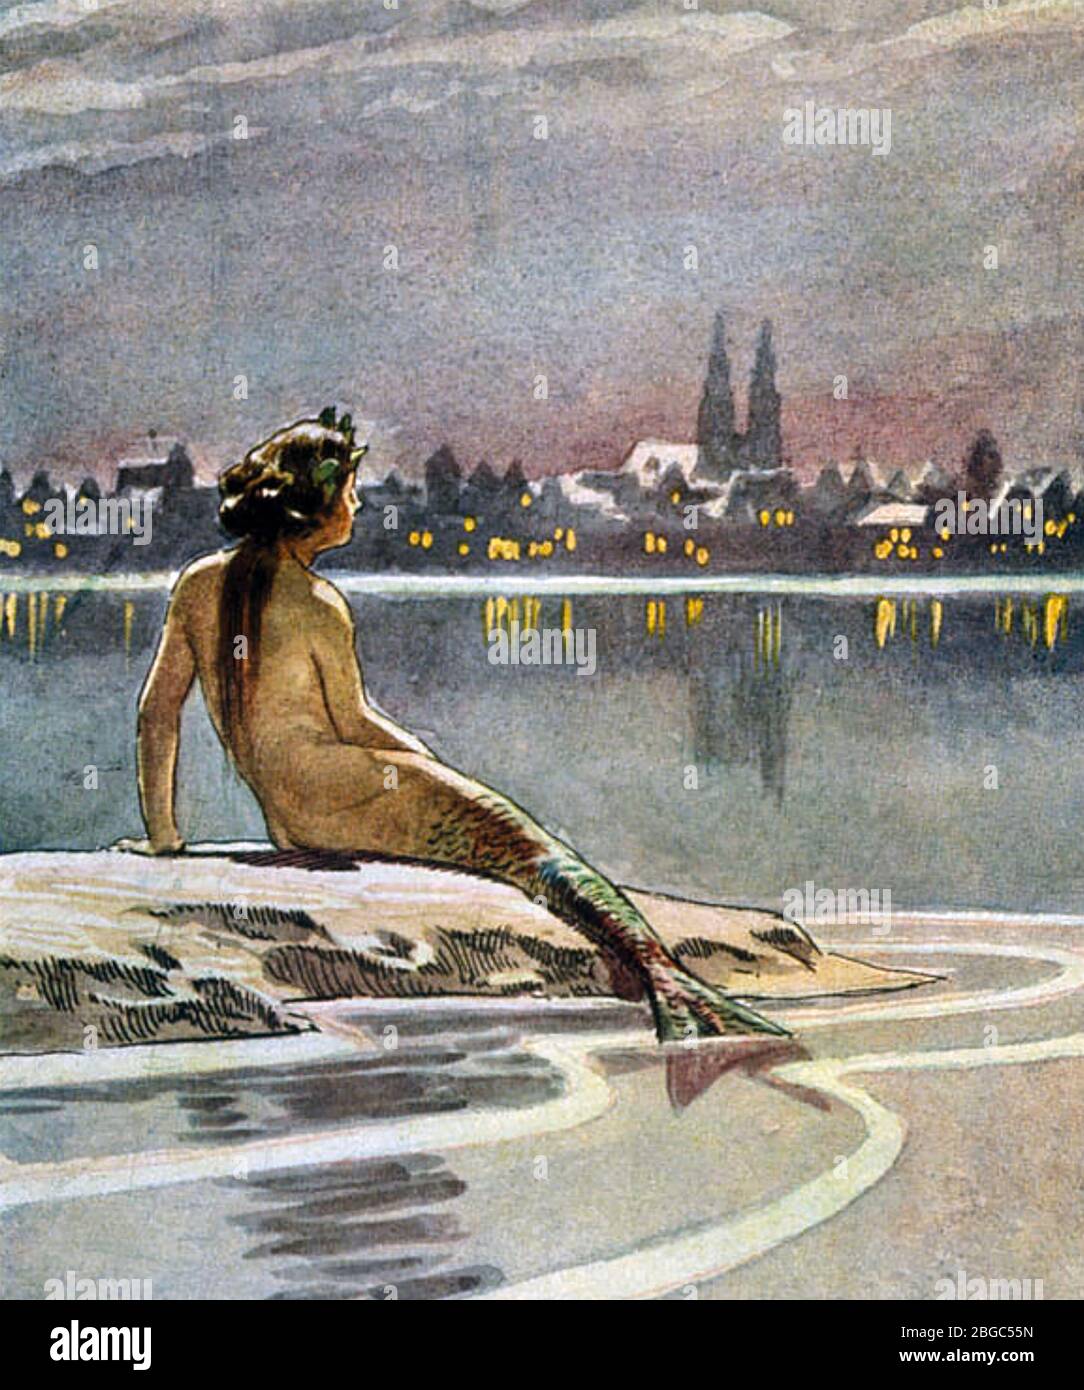 THE LITTLE MERMAID in the fairy tale by Hans Christian Andersen, looks across the water to Copenhagen Stock Photo